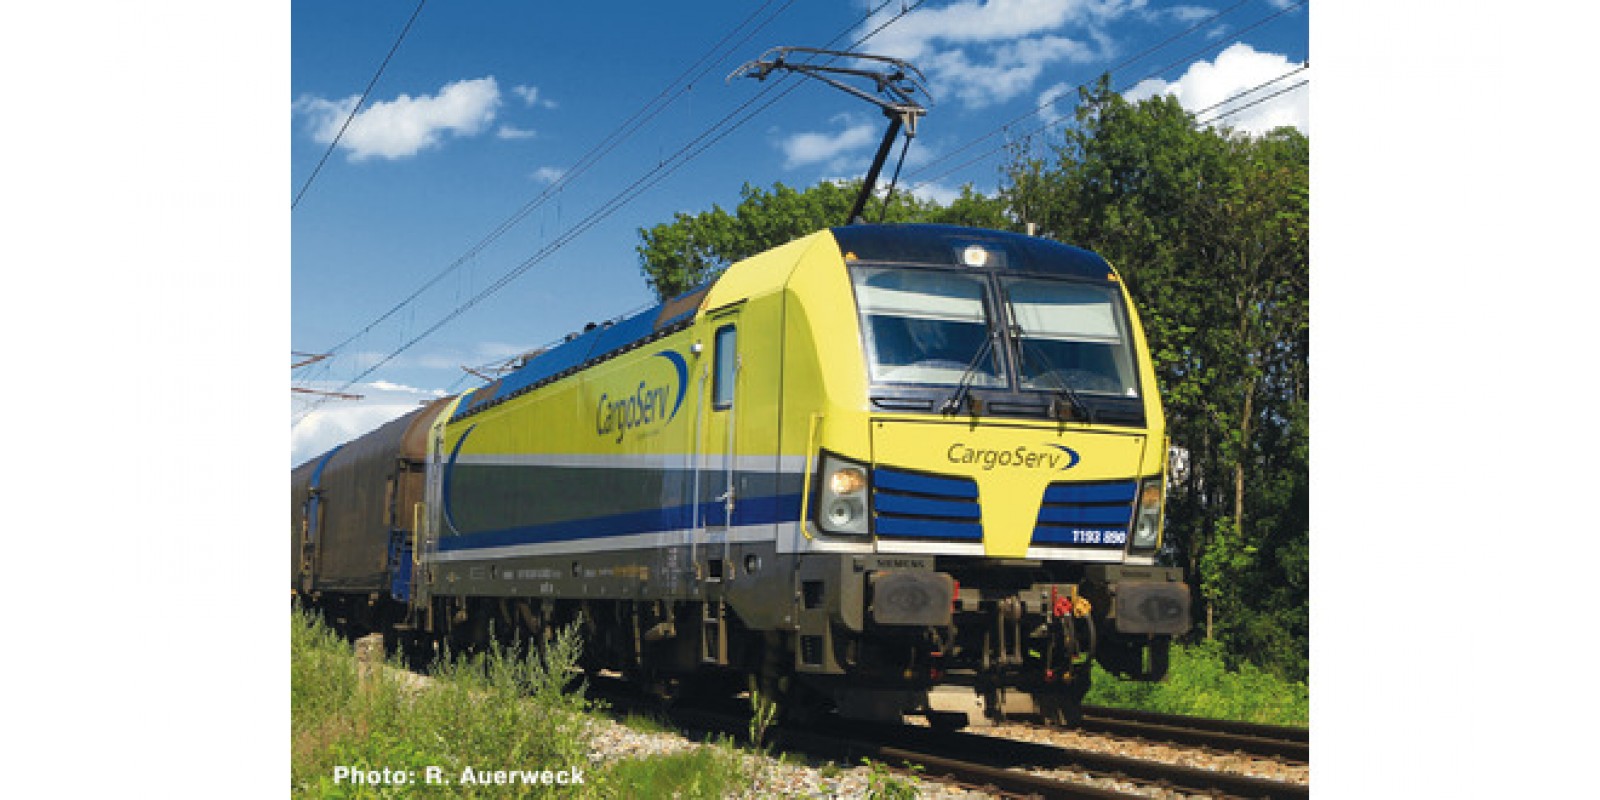 RO73924 - Electric locomotive 1193 890, Cargoserv